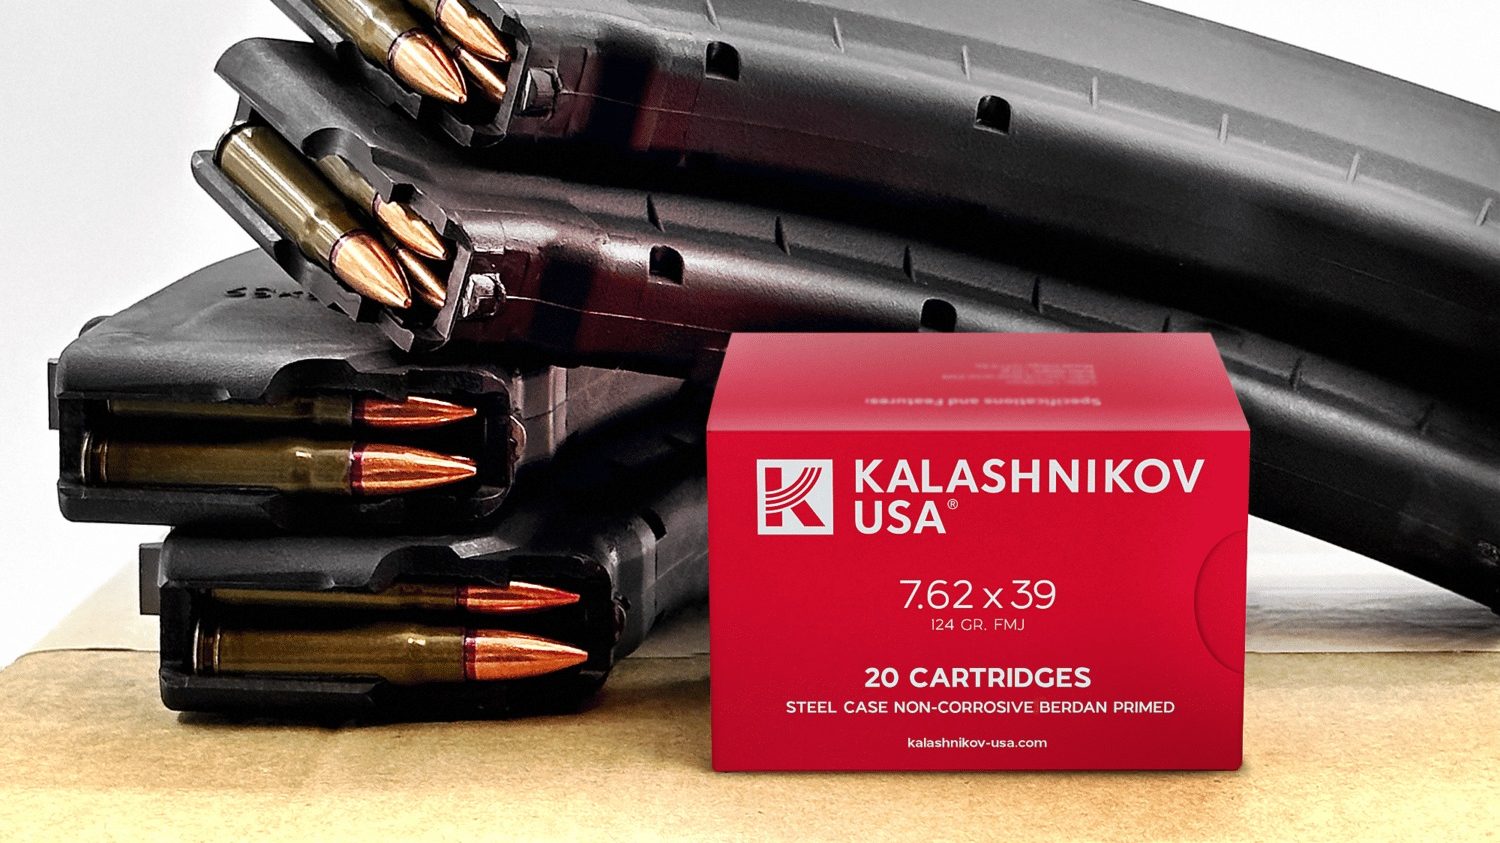 Kalashnikov USA Debuts Their New 124 grain 7.62x39mm AmmunitionThe